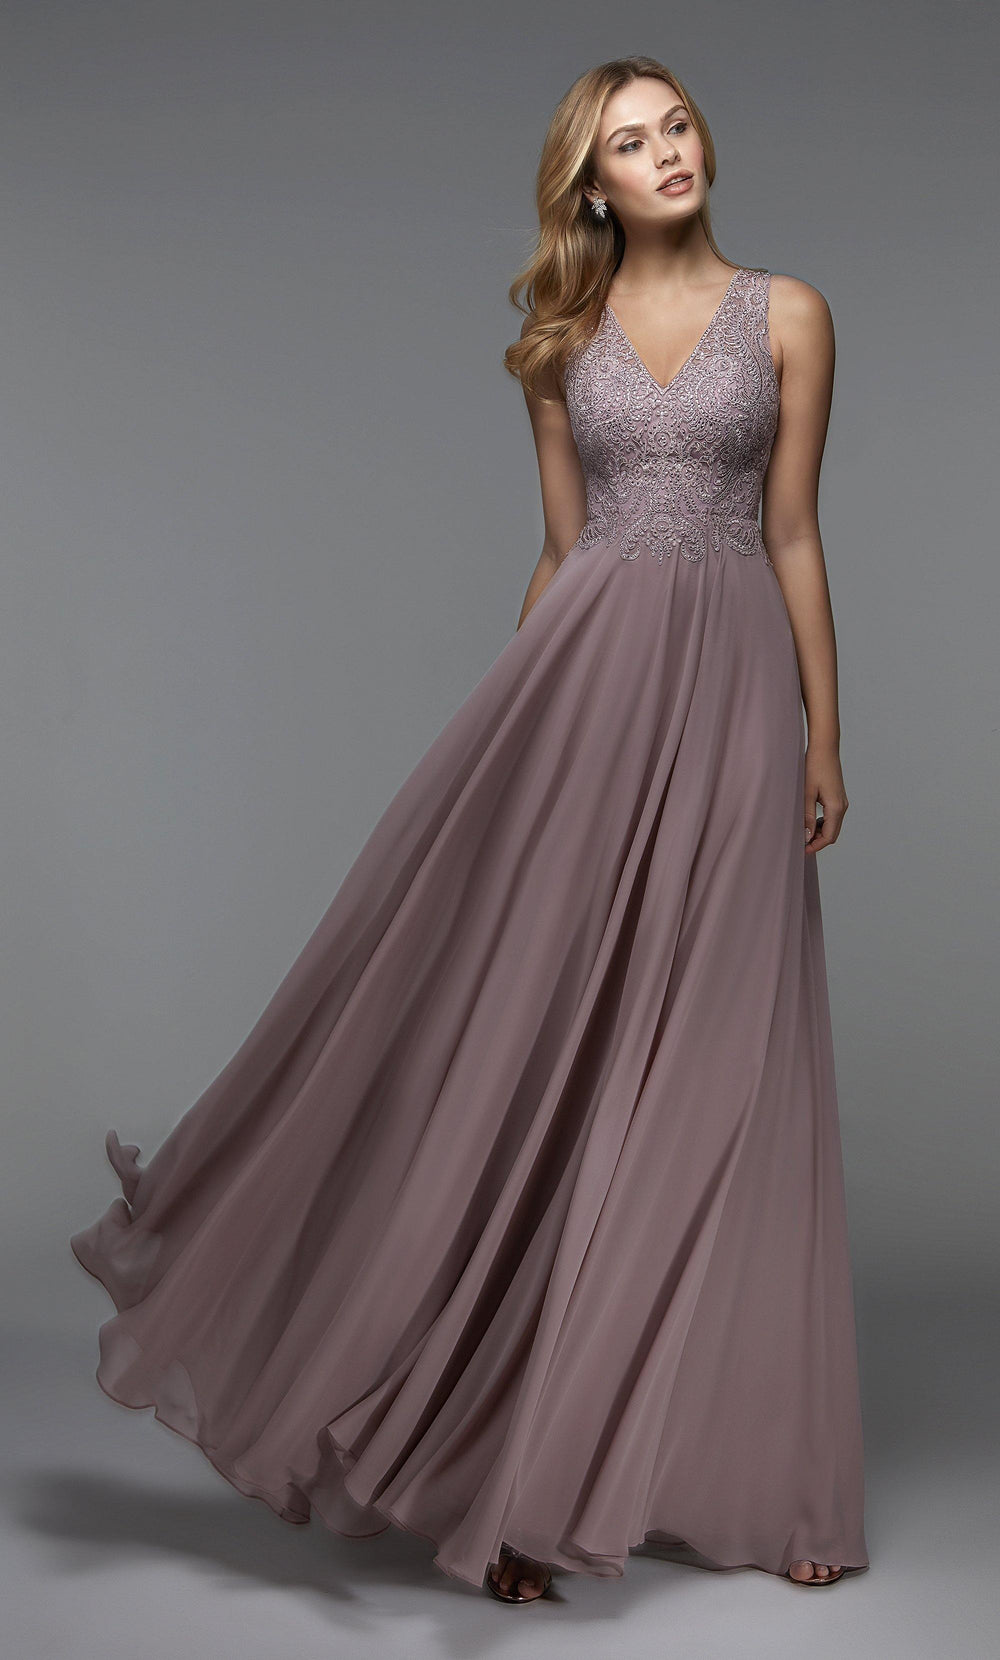 Formal Dress: 27481. Long Formal Dress, Illusion Neckline, Flowy